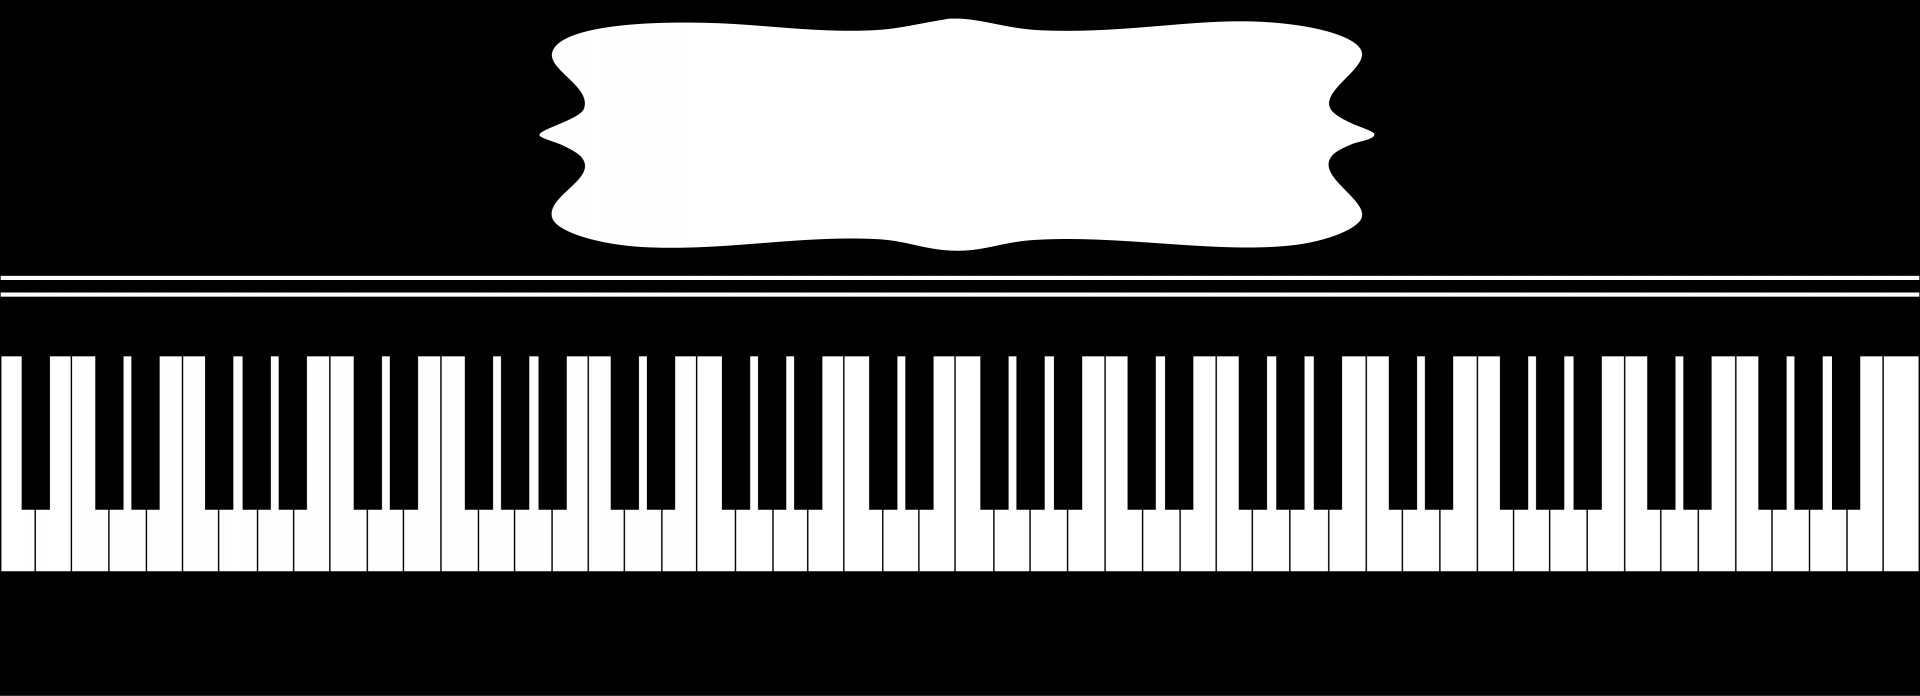 Клавиатура фортепиано вектор